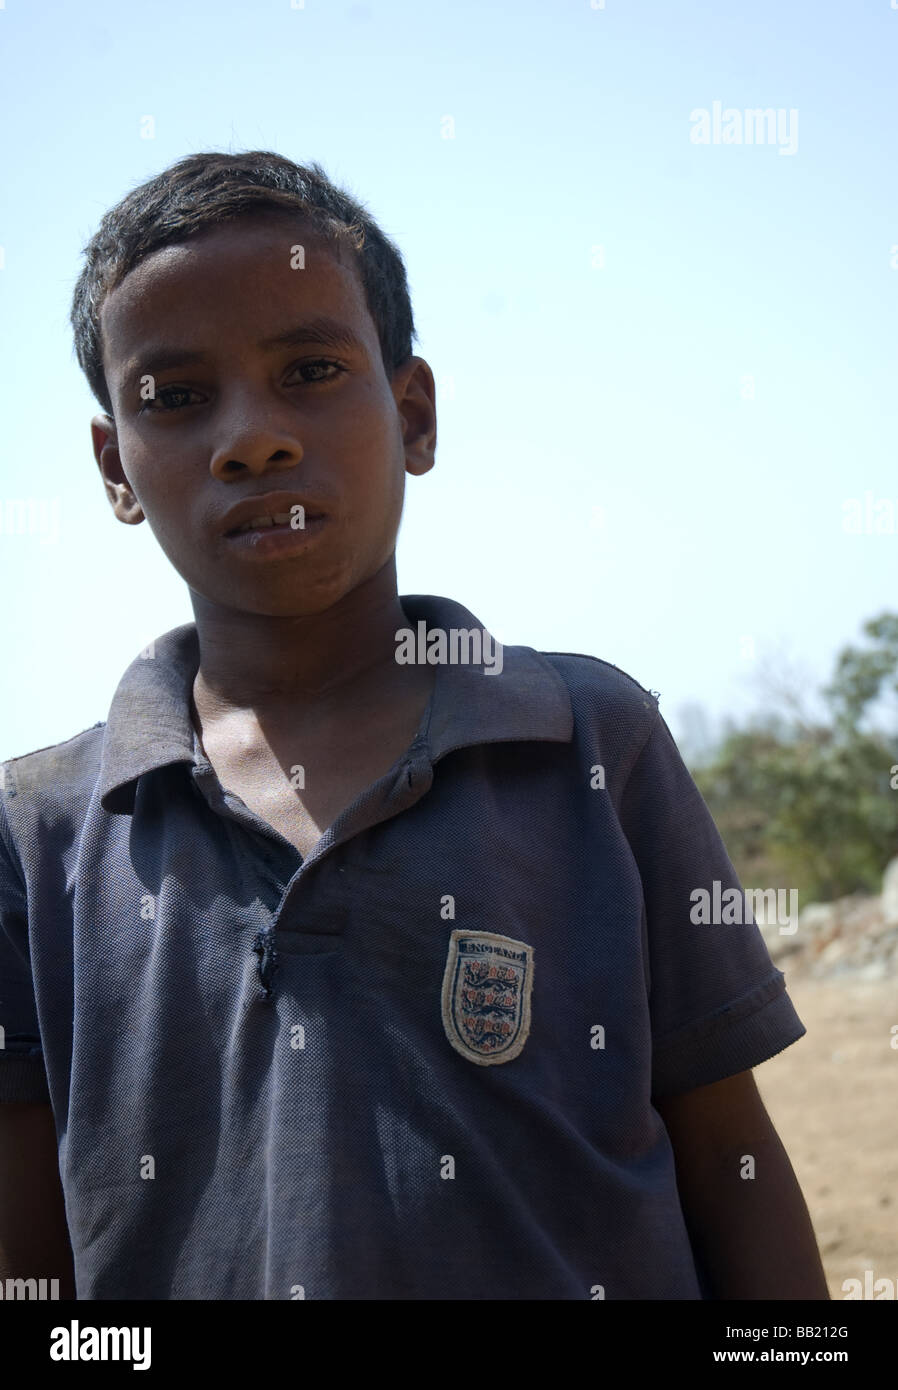 child beggar from mumbai, wearing a england shirt Stock Photo